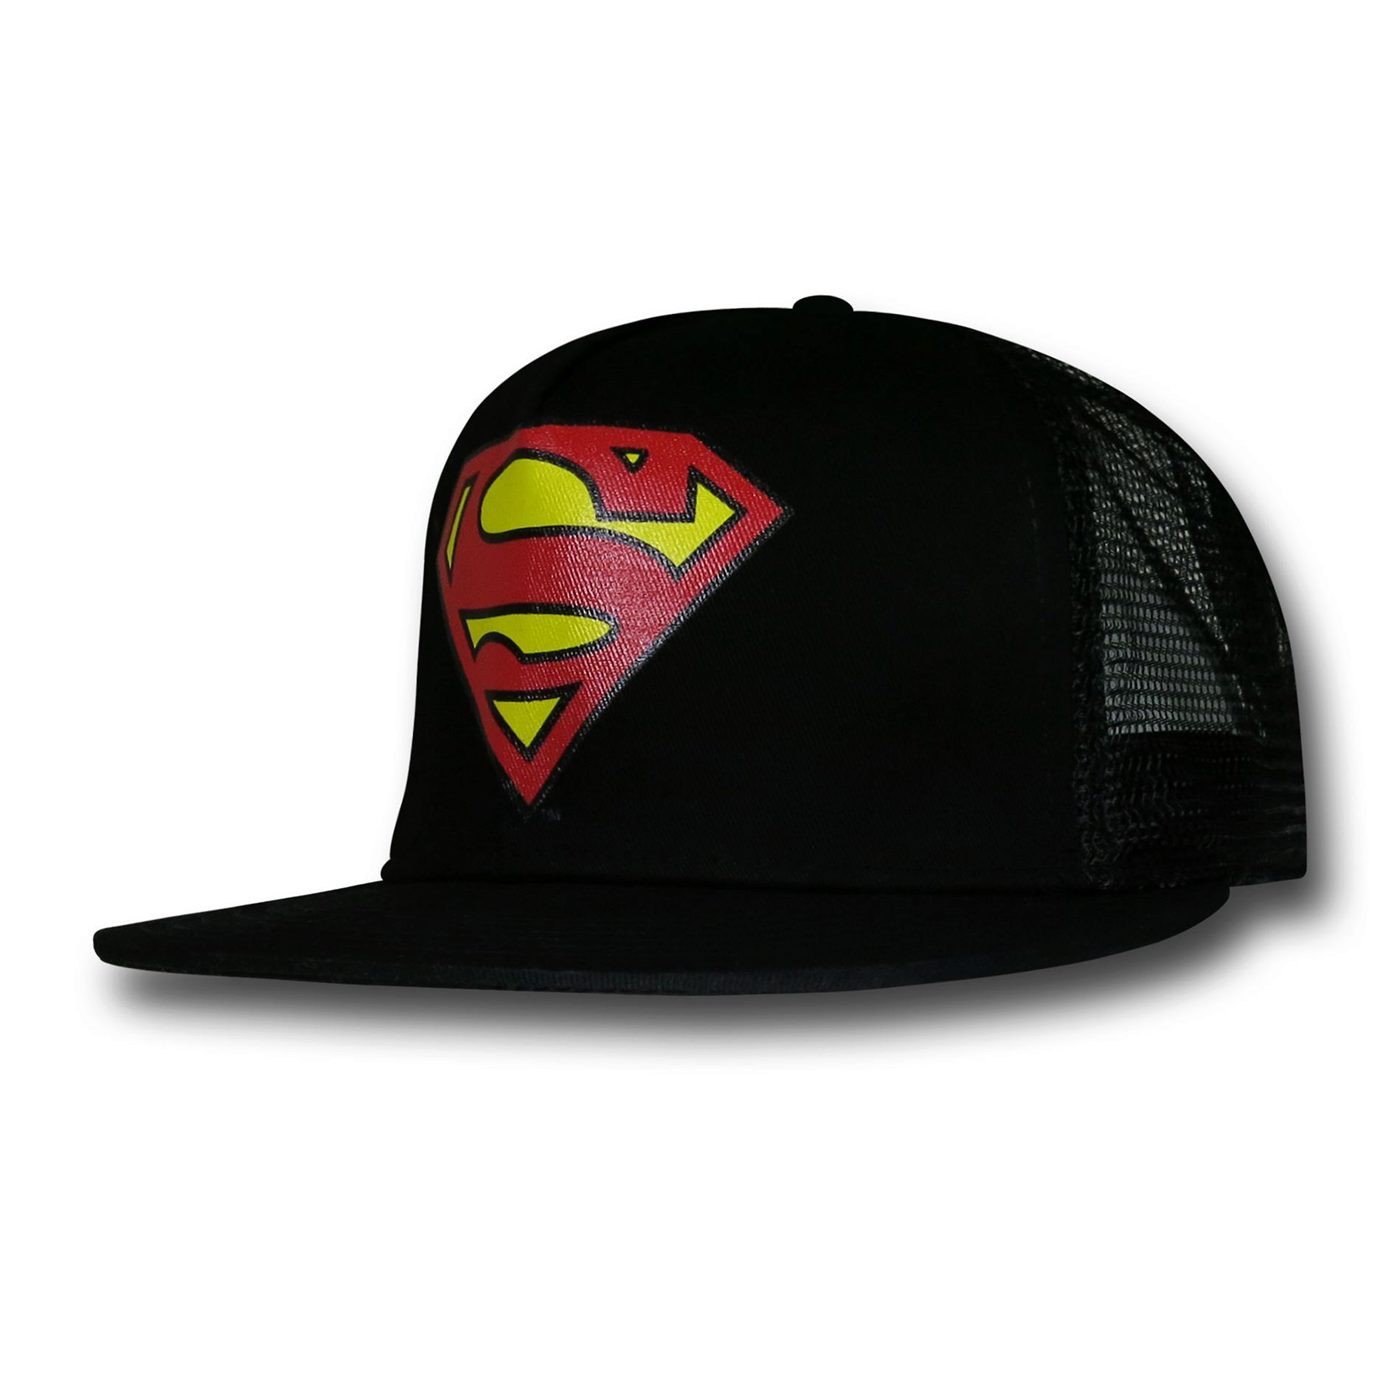 Superman Symbol Black Snapback Trucker Cap